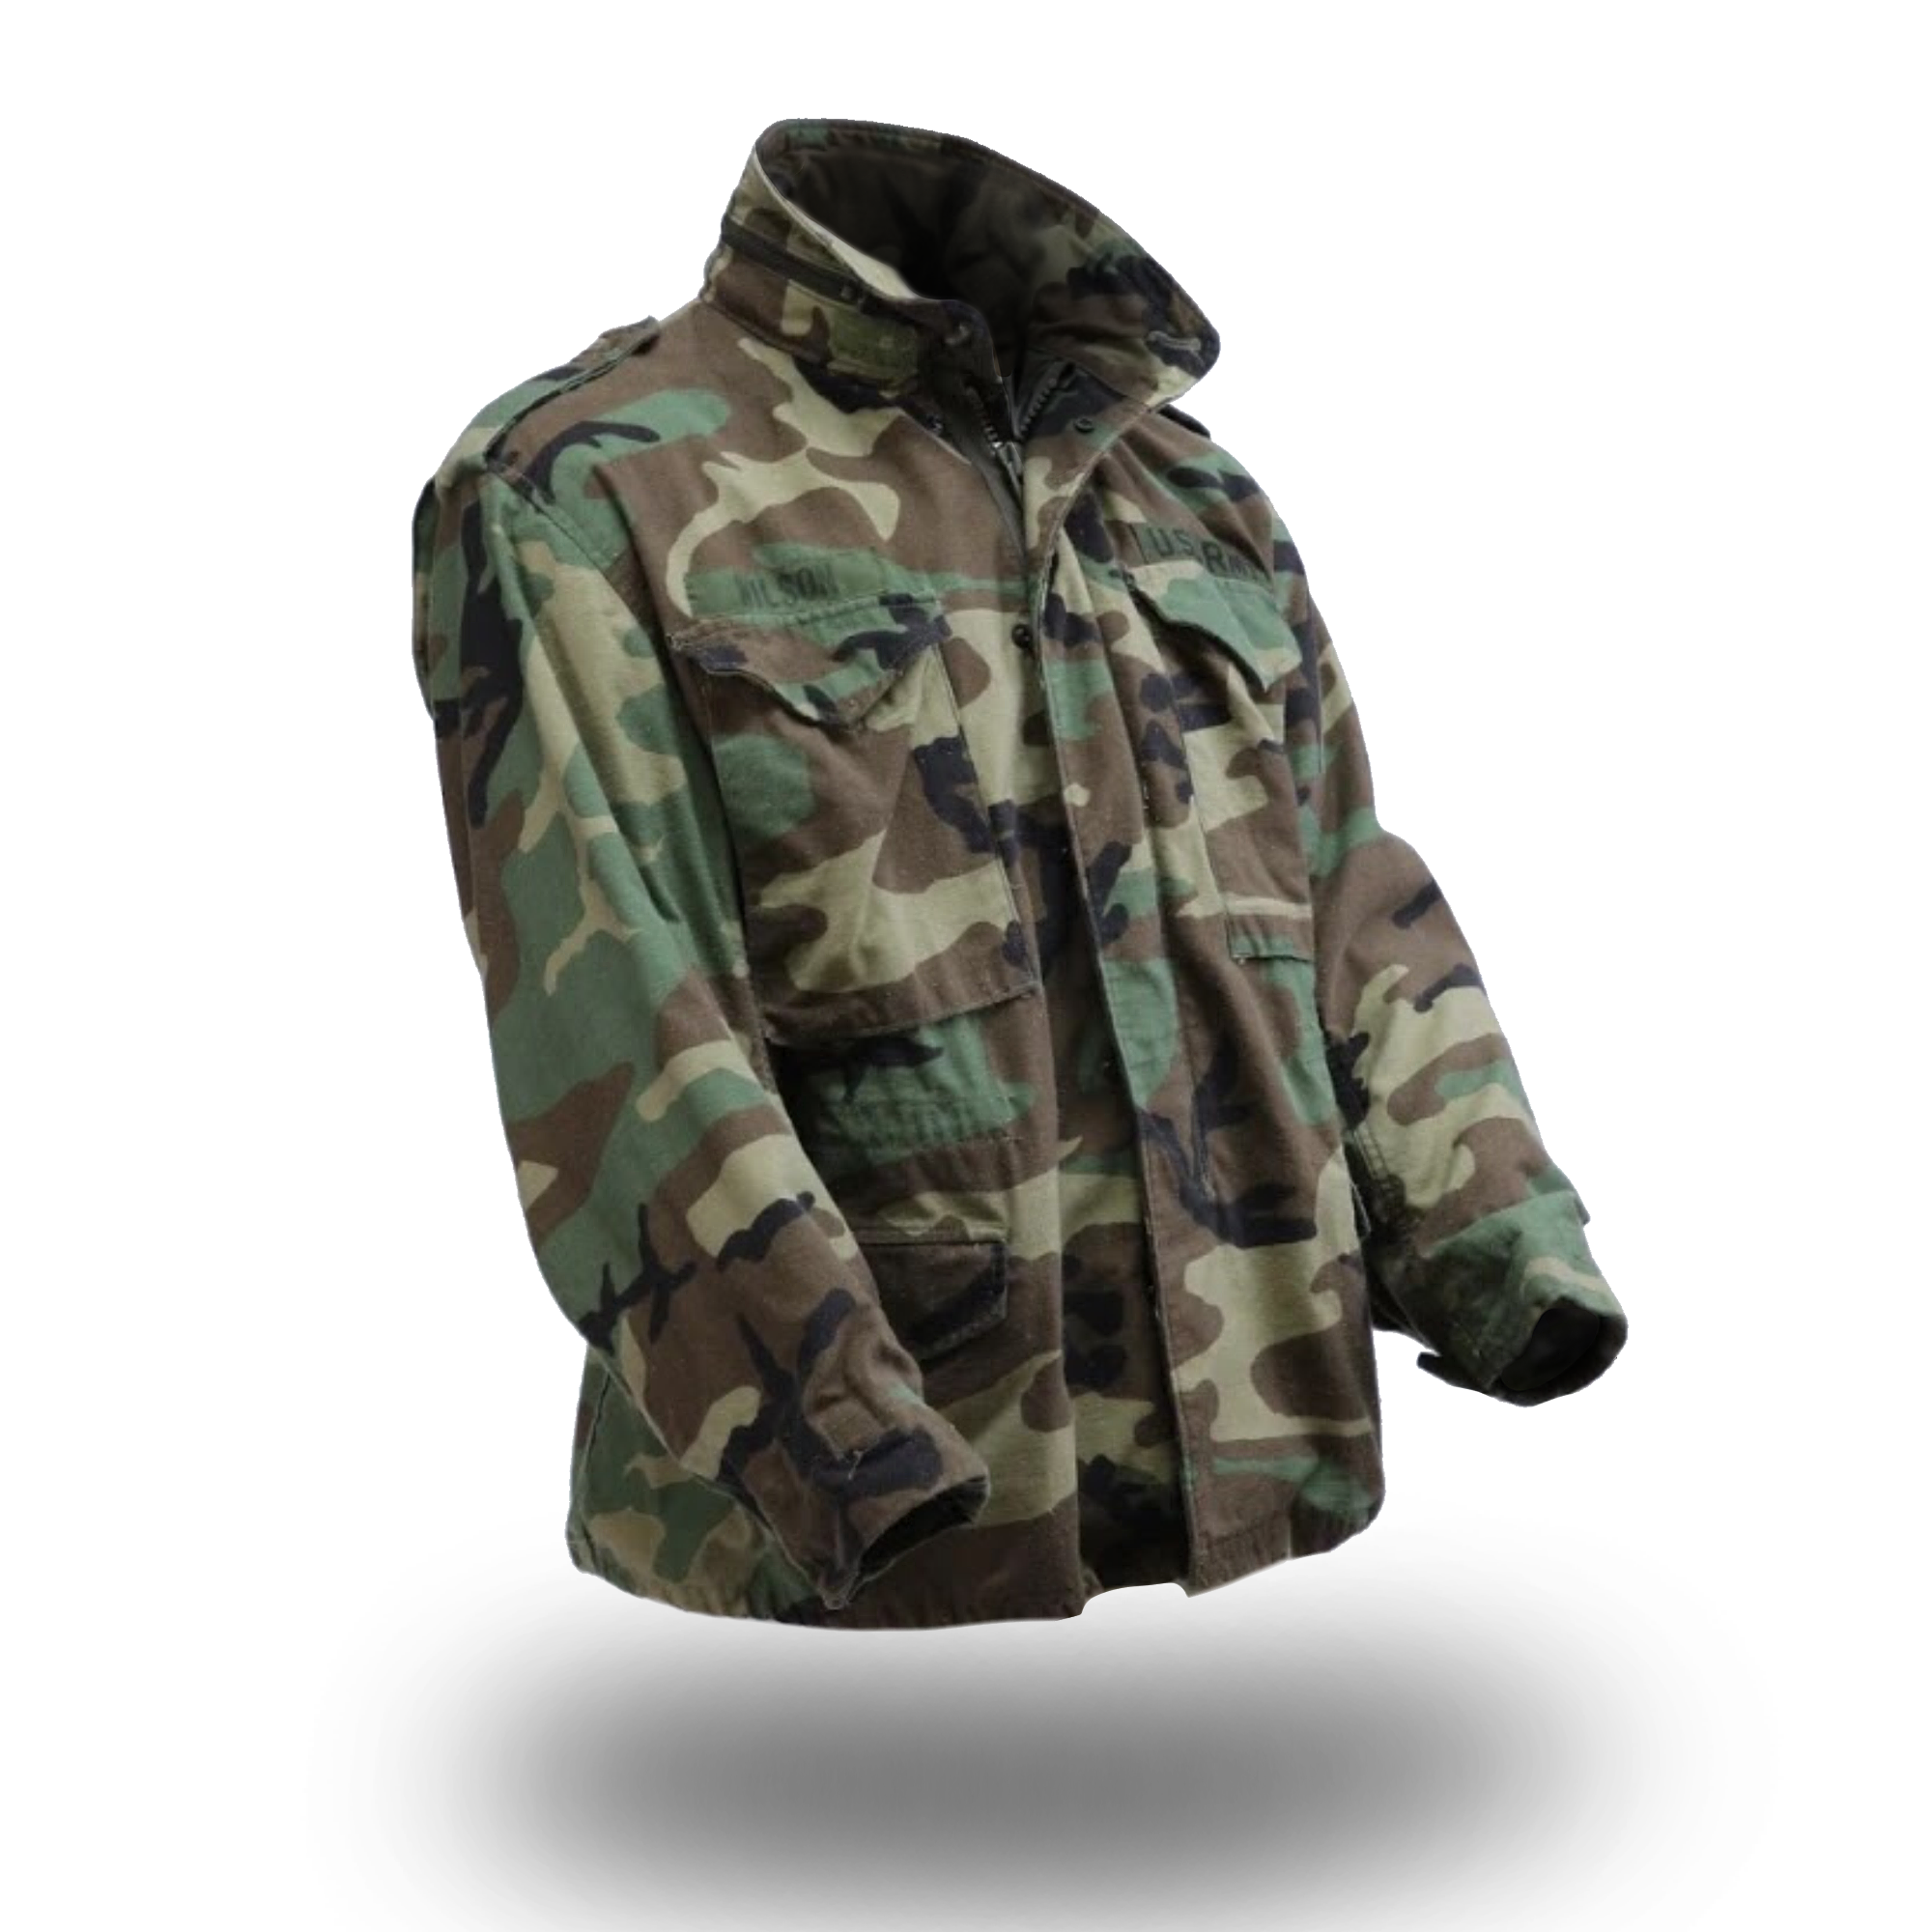 US Military M65 BDU Woodland Camo Field Jacket Outerwear Coat